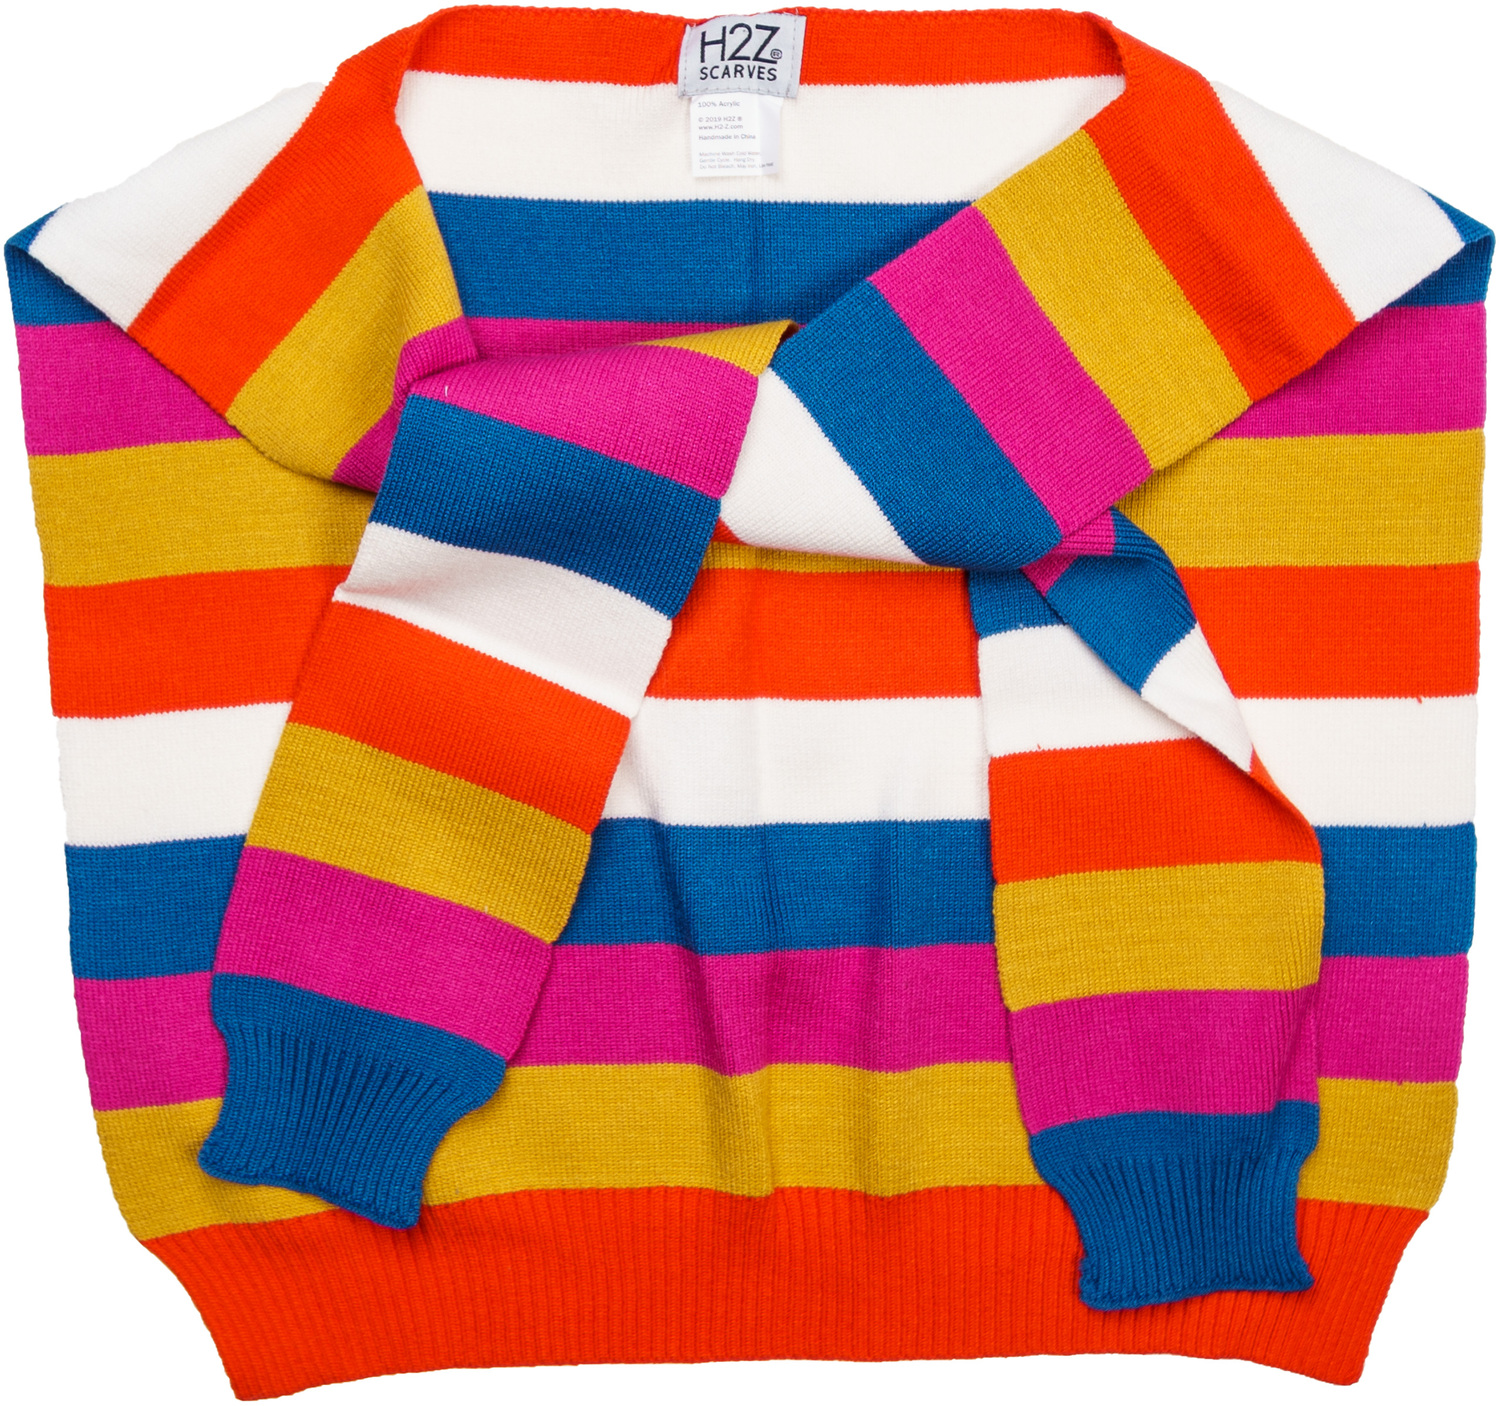 Sorbet Stripes by H2Z Scarves - Sorbet Stripes - 17" x 41" Faux Sweater Scarf